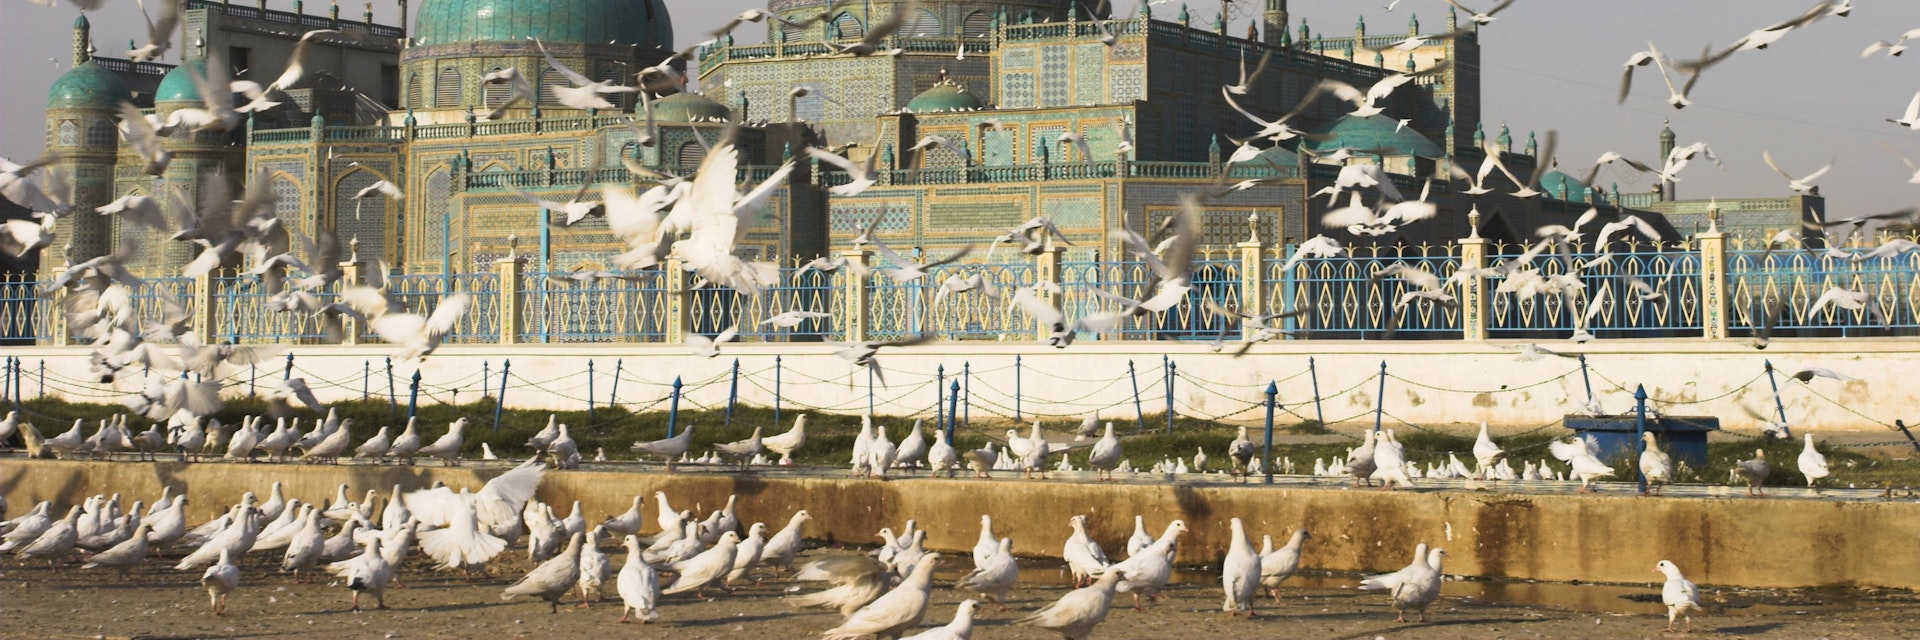 The famous white pigeons, Shrine of Hazrat Ali, Mazar-I-Sharif, Balkh province, Afghanistan, Asia